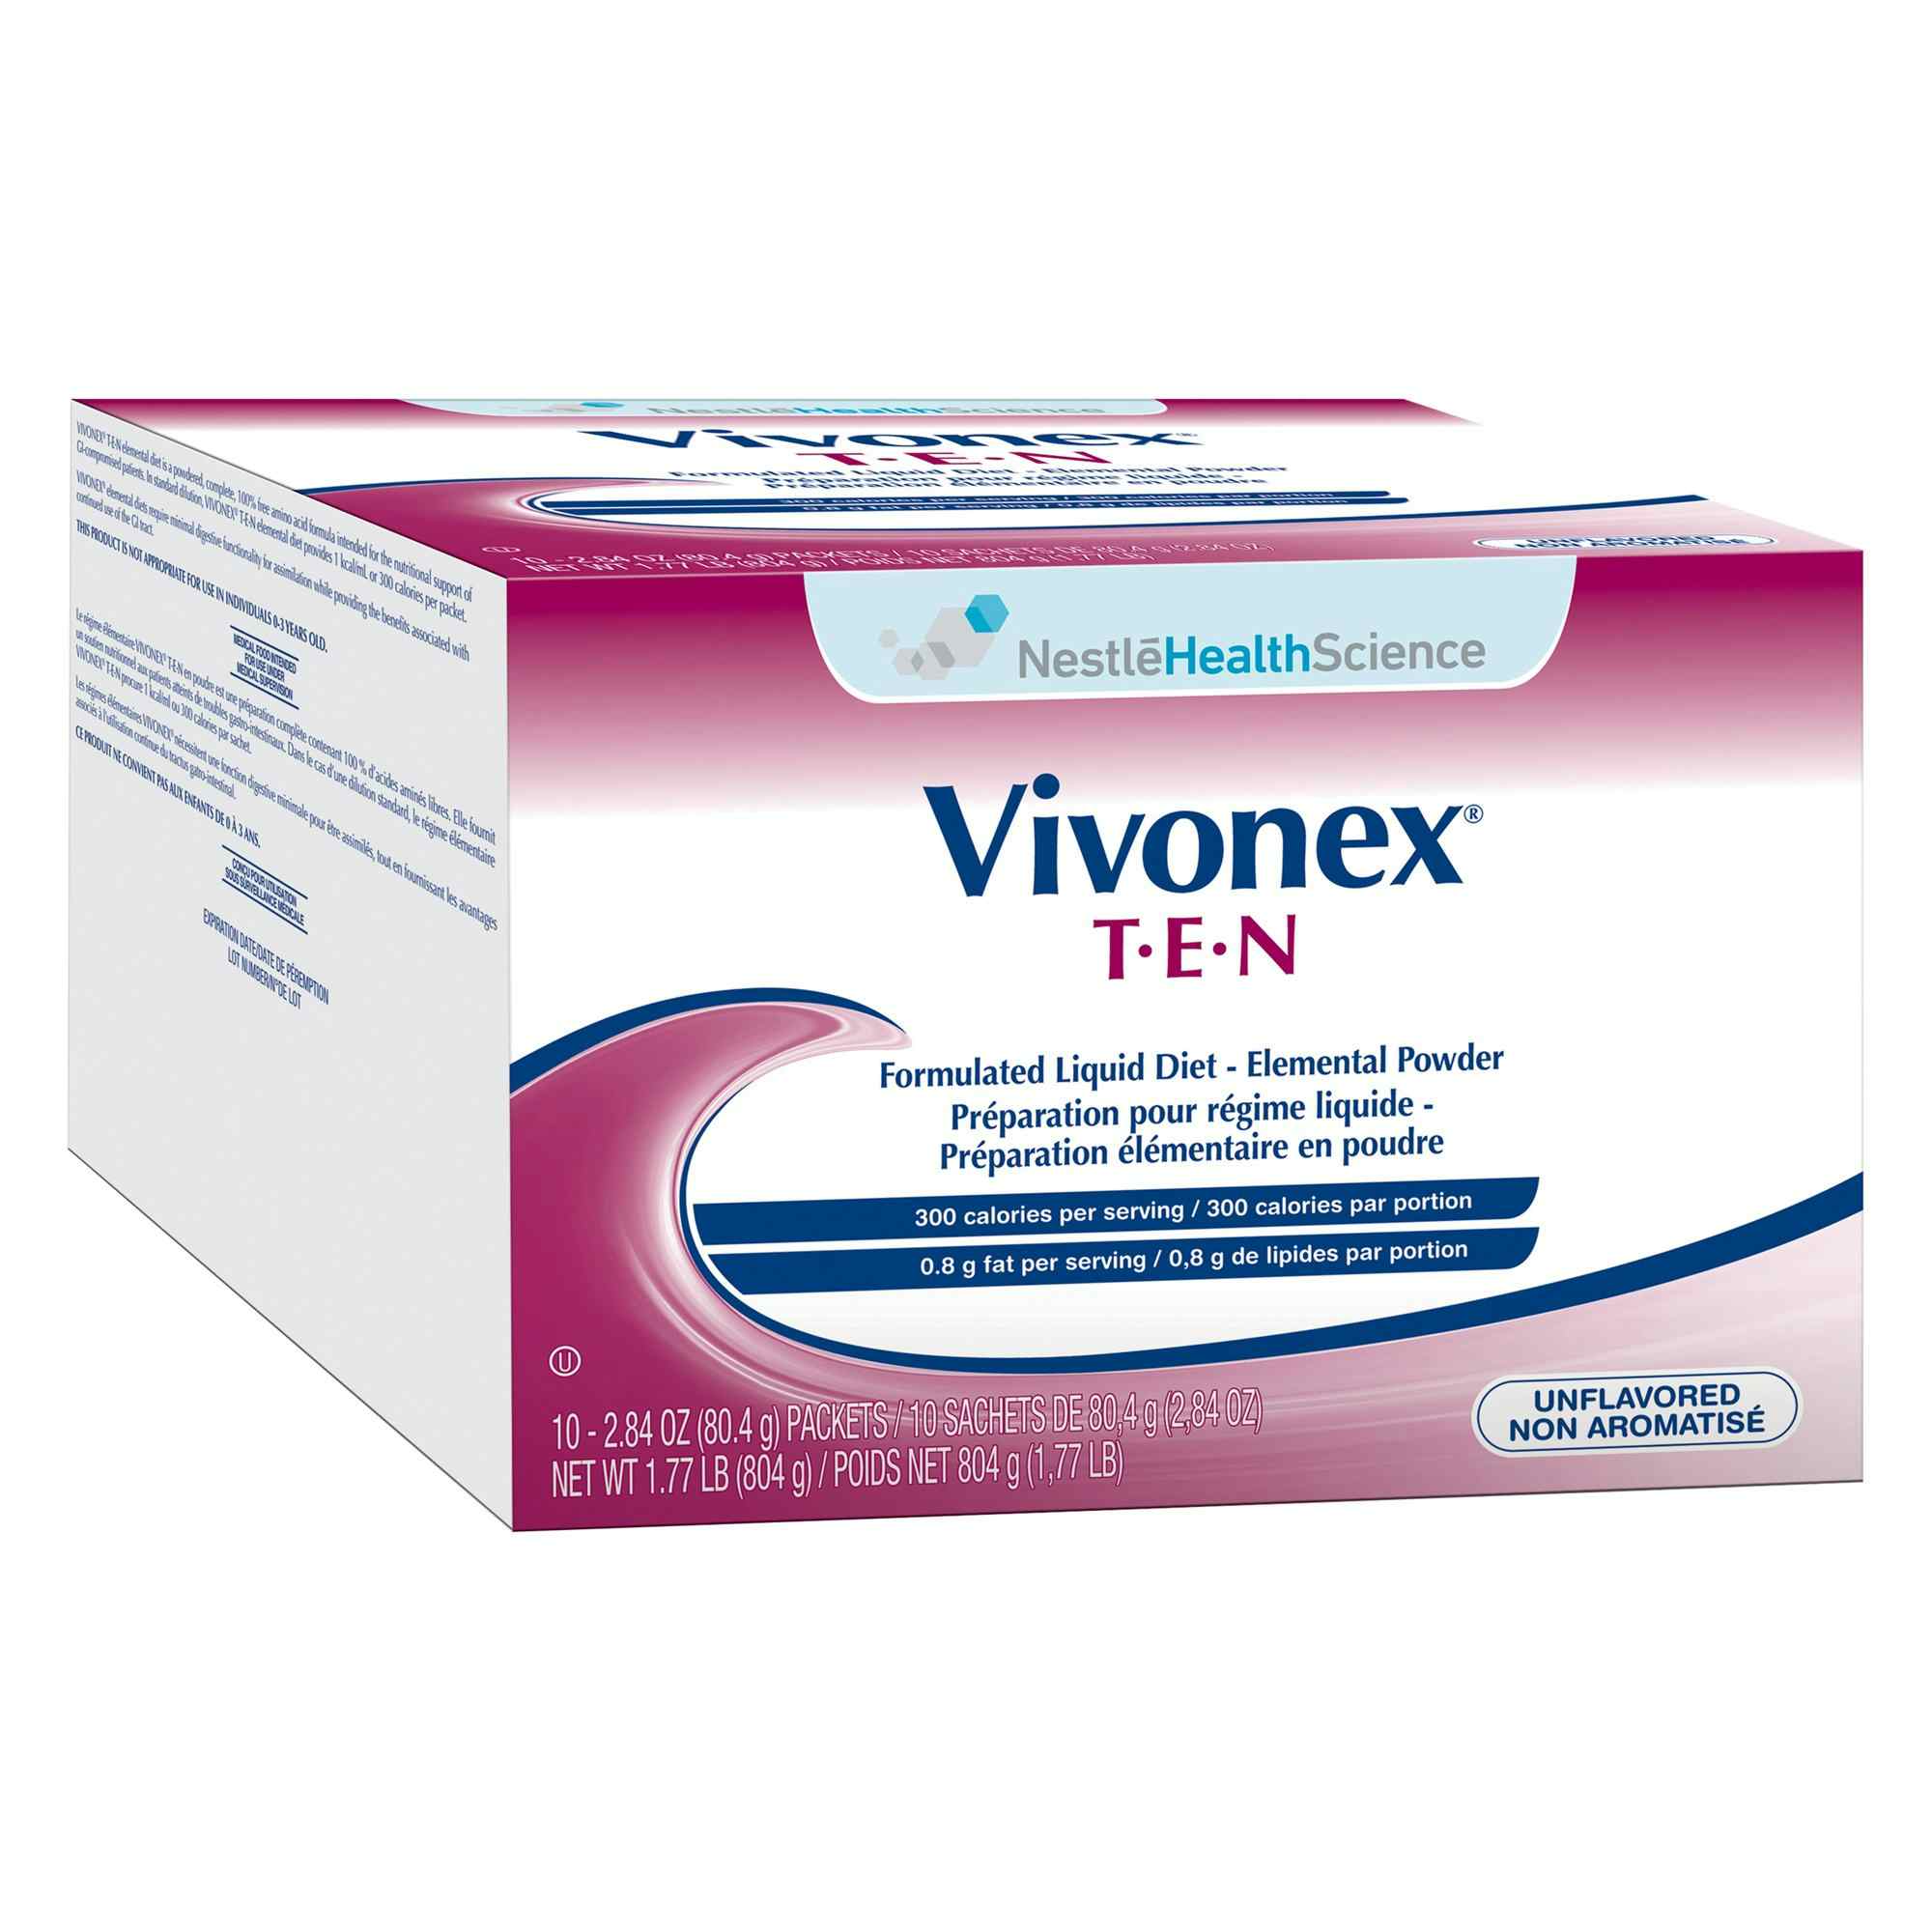 Nestle HealthScience Vivonex T.E.N Formulated Liquid Diet Elemental Powder Tube Feeding Formula, Individual Packet, 10043900712748, Box of 10